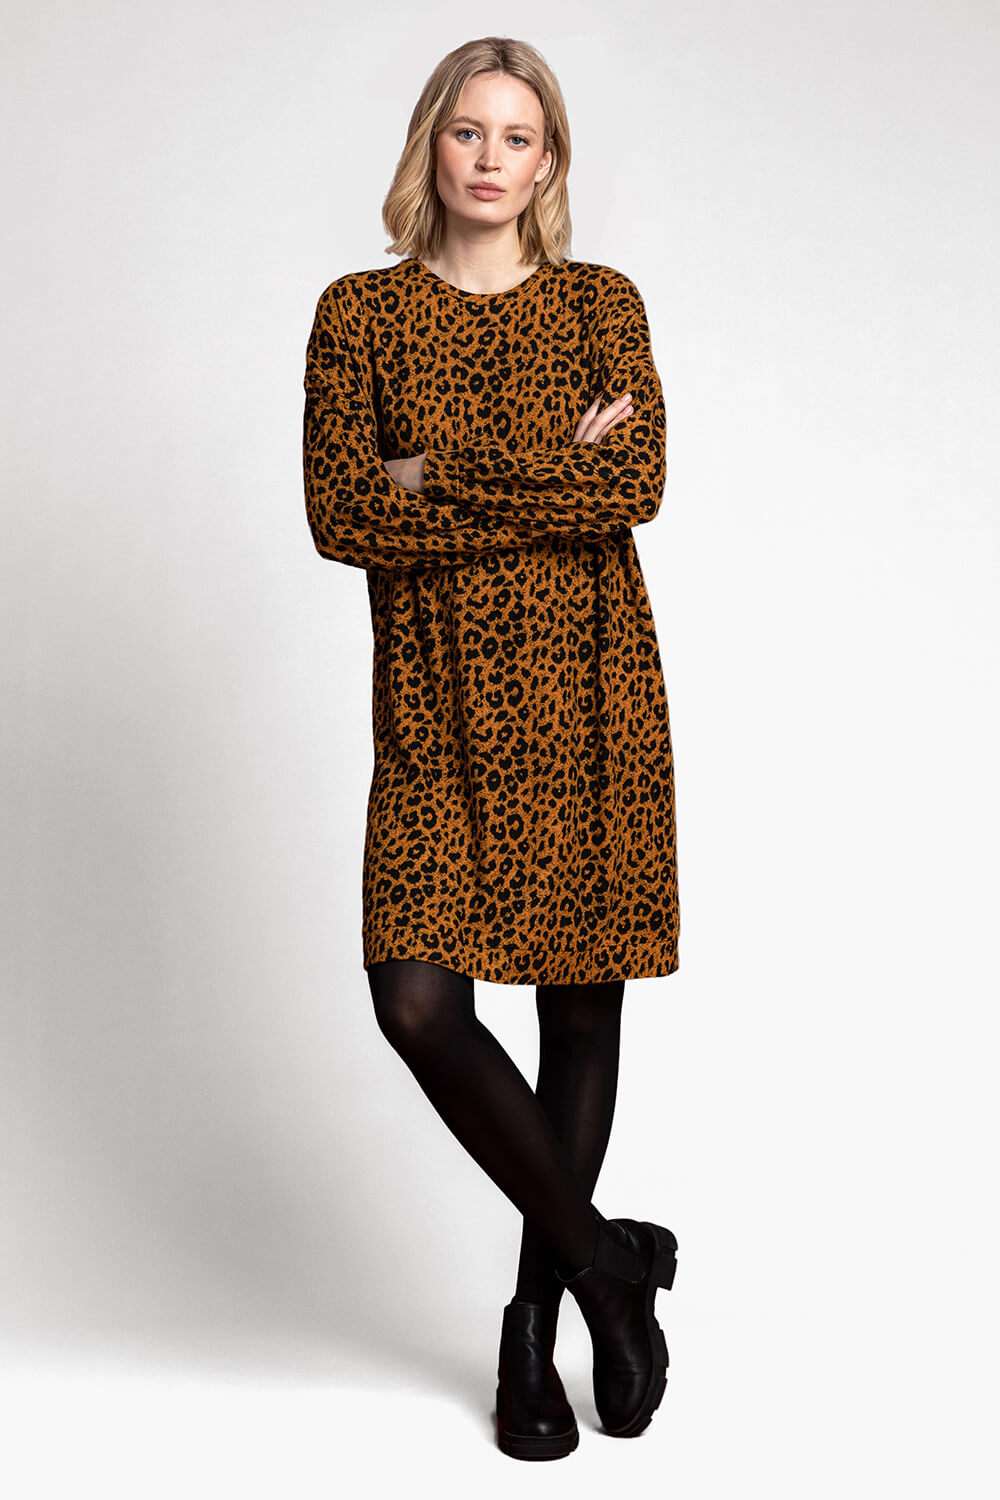 Coffee Animal Jacquard Print Jersey Dress, Image 3 of 5